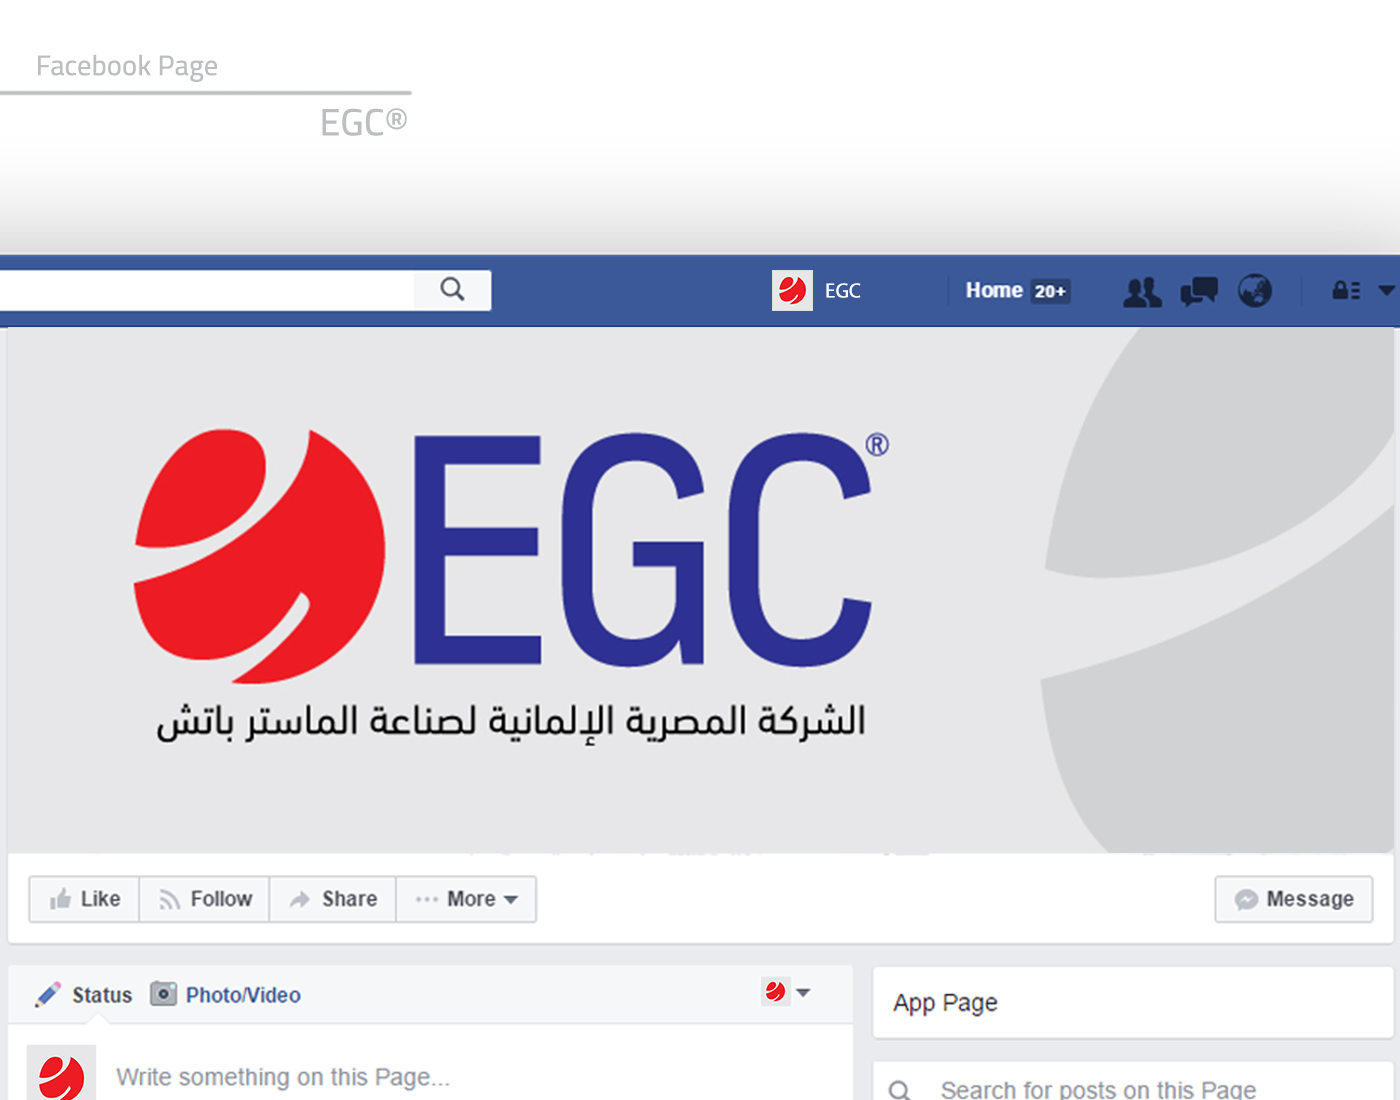 EGC Brand Identity